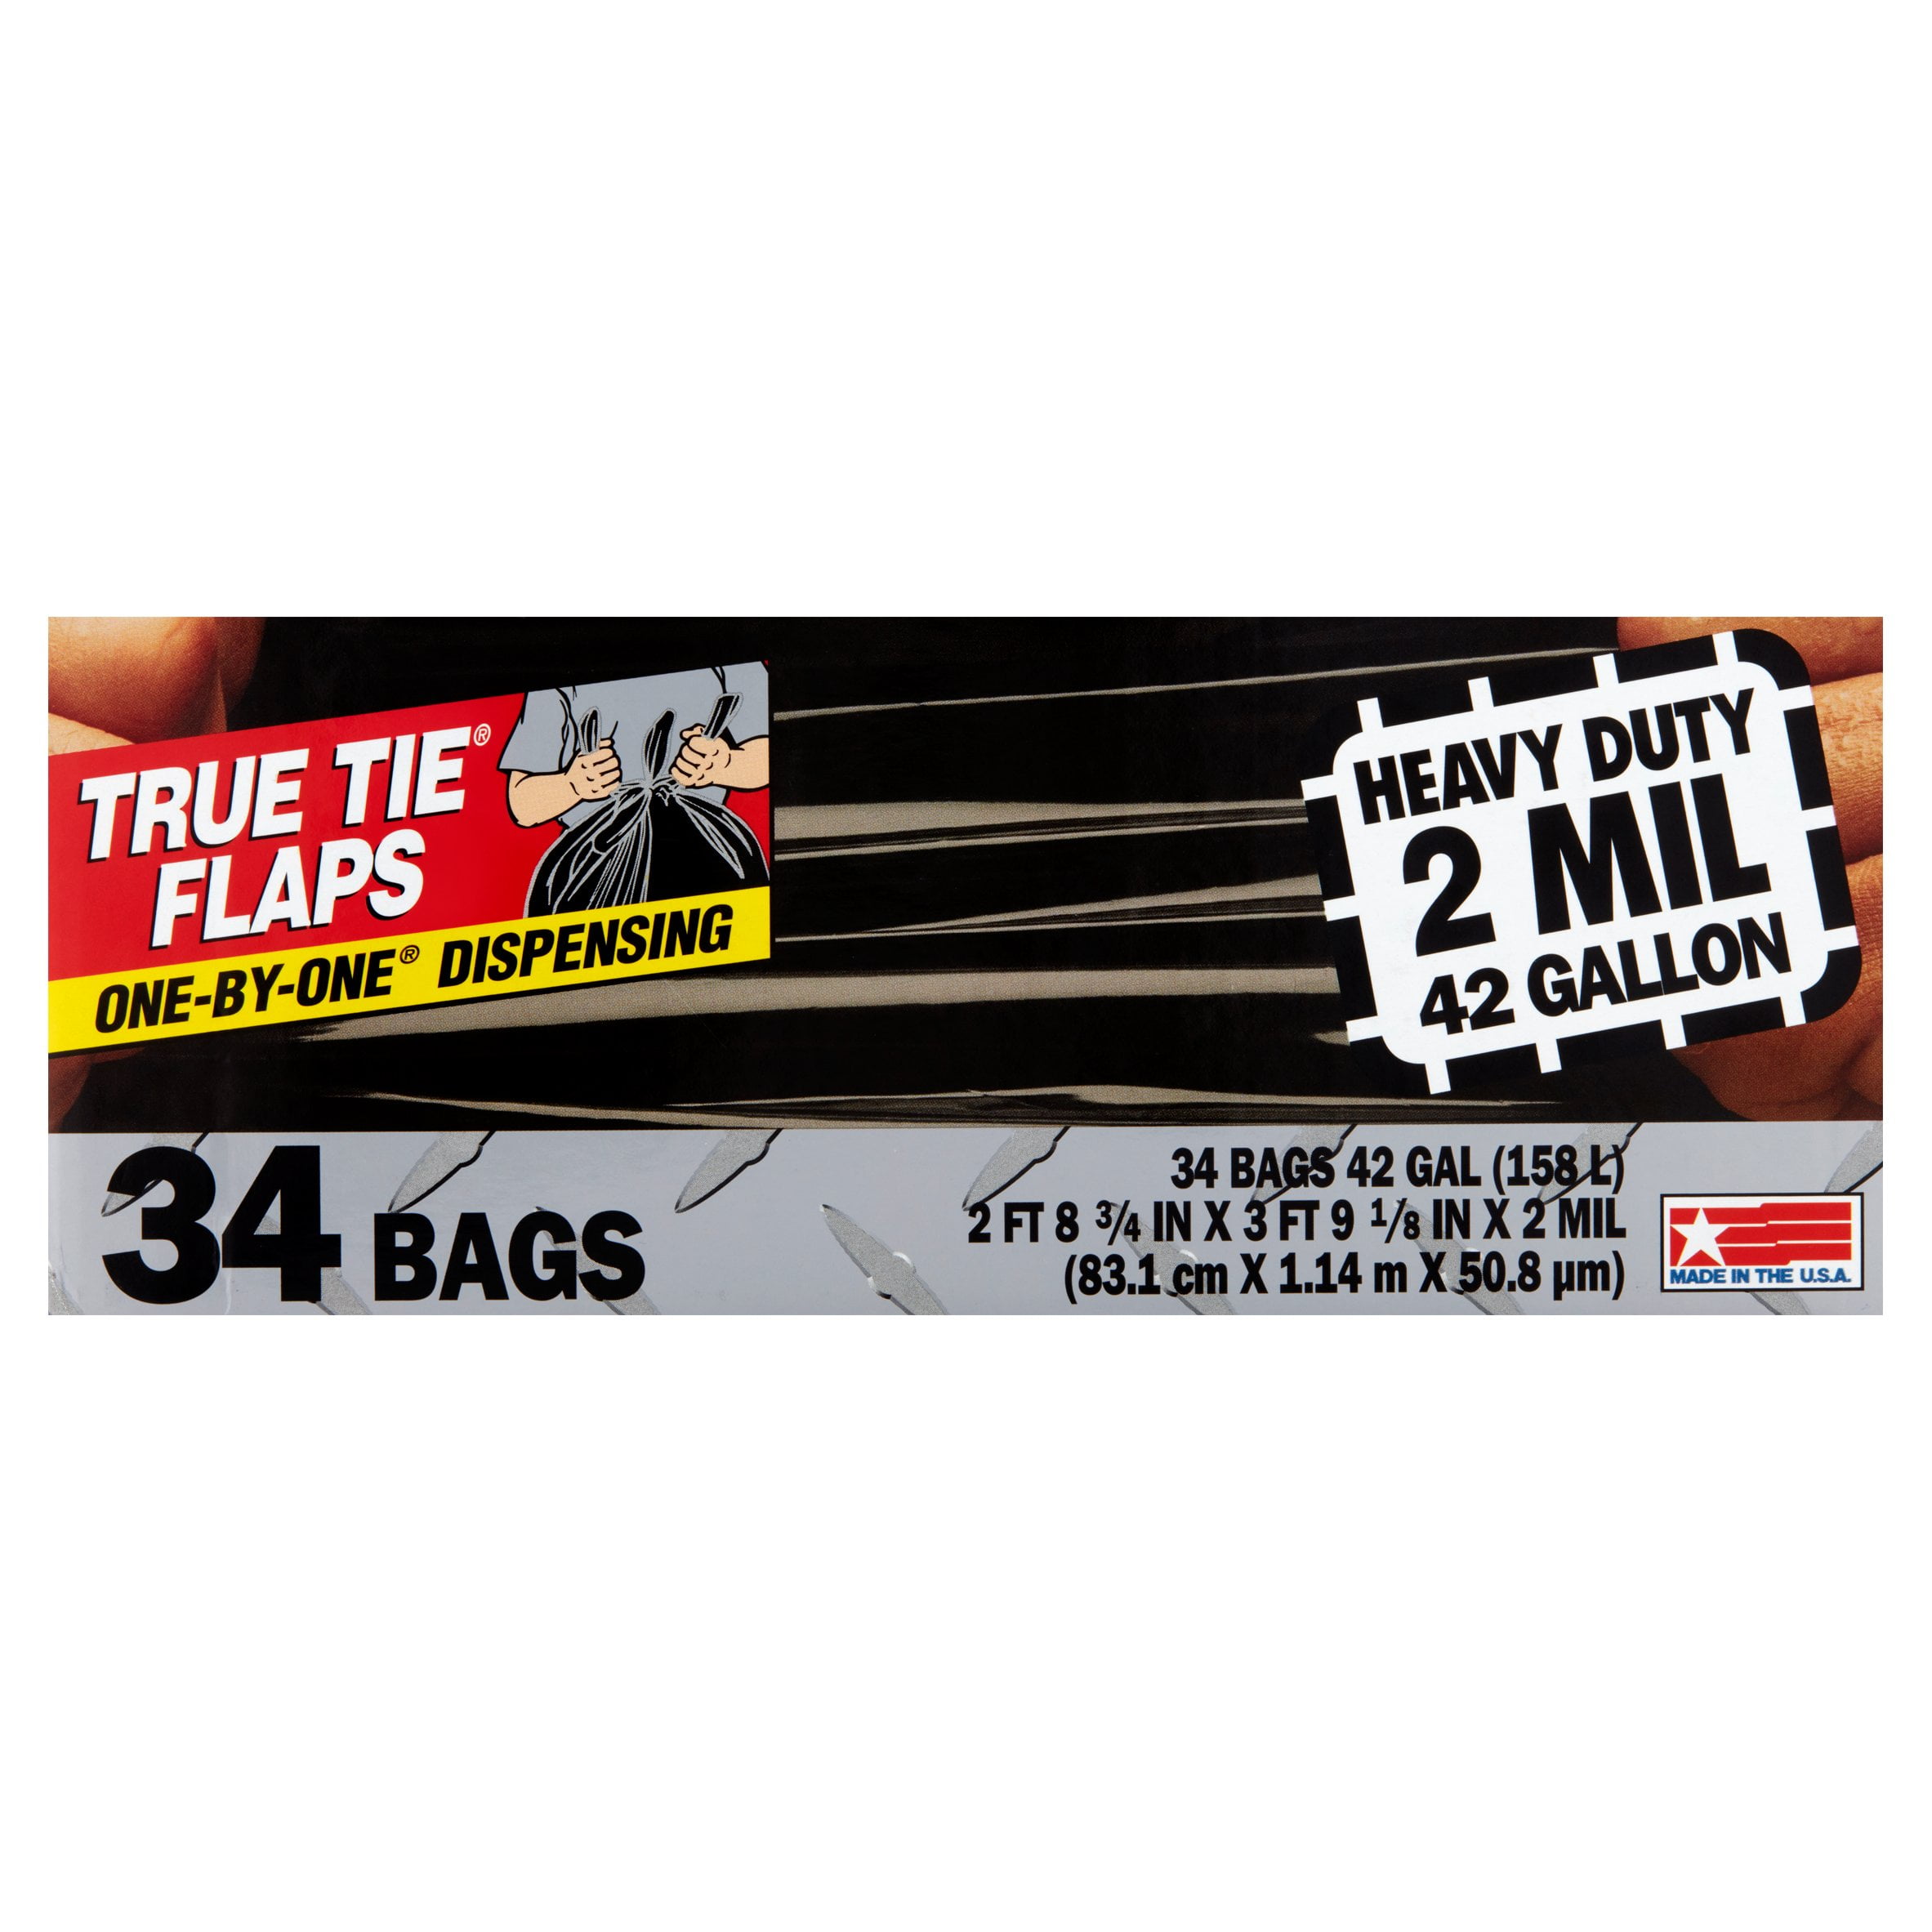 Husky Contractor Clean-Up Bags, Heavy Duty, True Tie Flaps, 42 Gallon - 22 bags